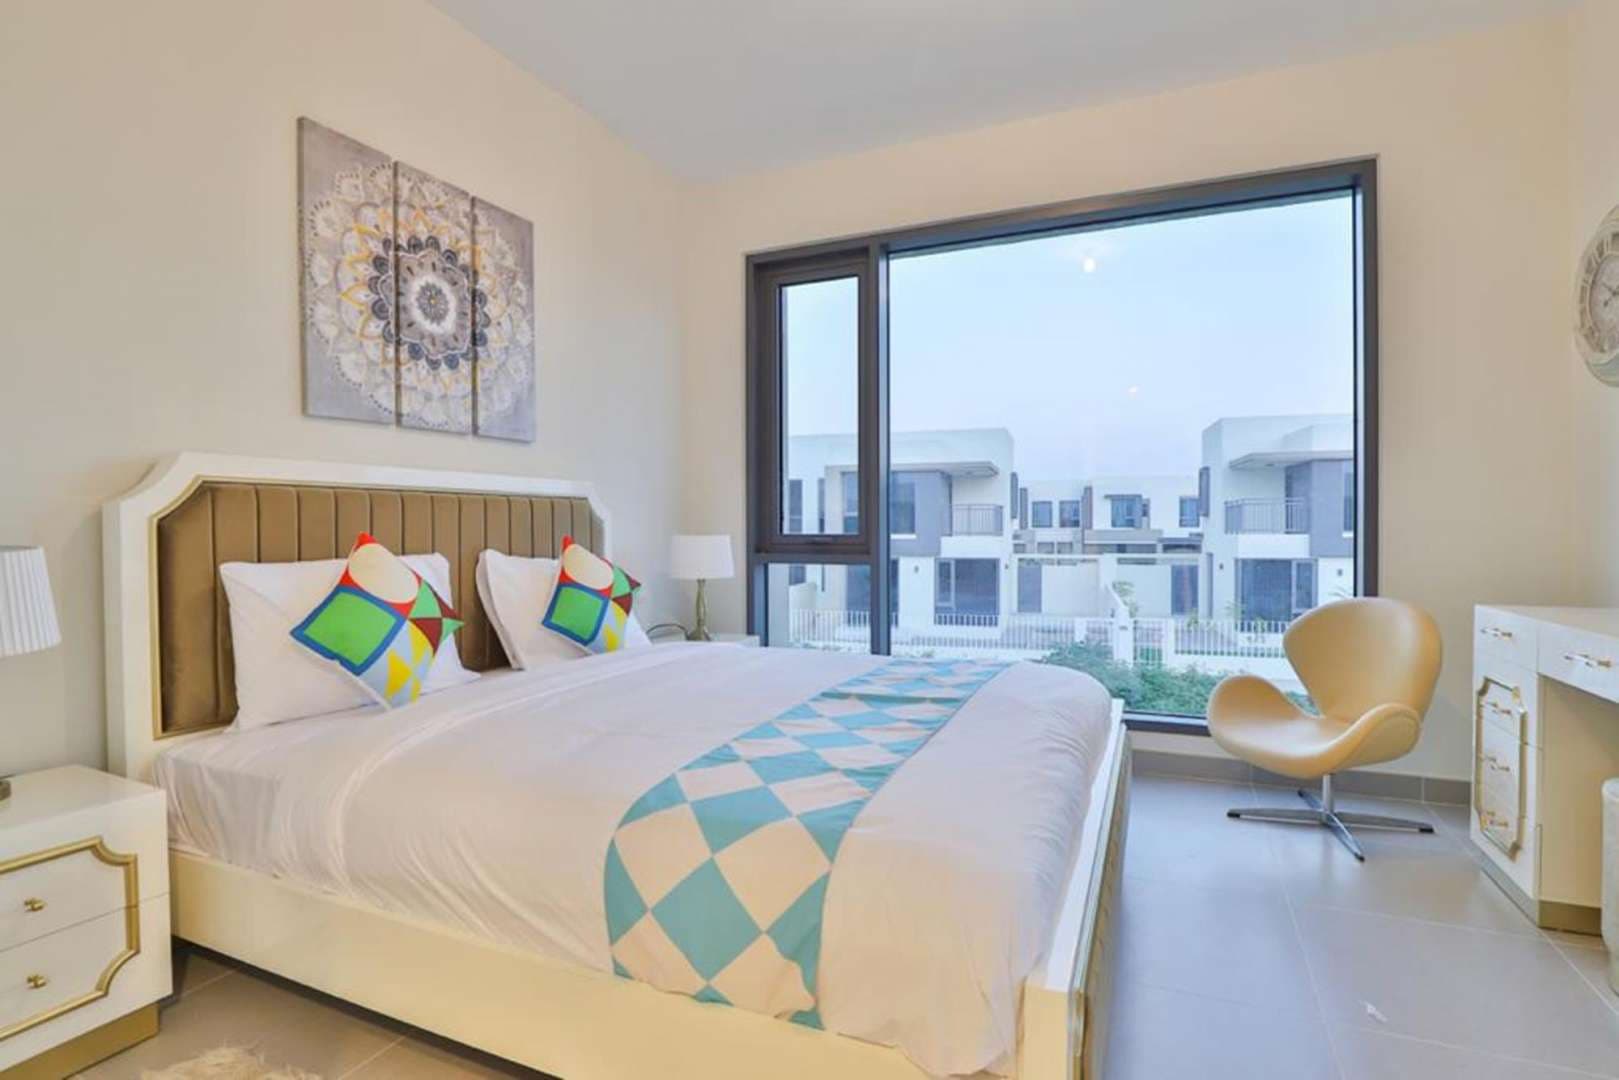 4 Bedroom Townhouse For Sale Maple At Dubai Hills Estate Lp06390 1672214432f4b200.jpg